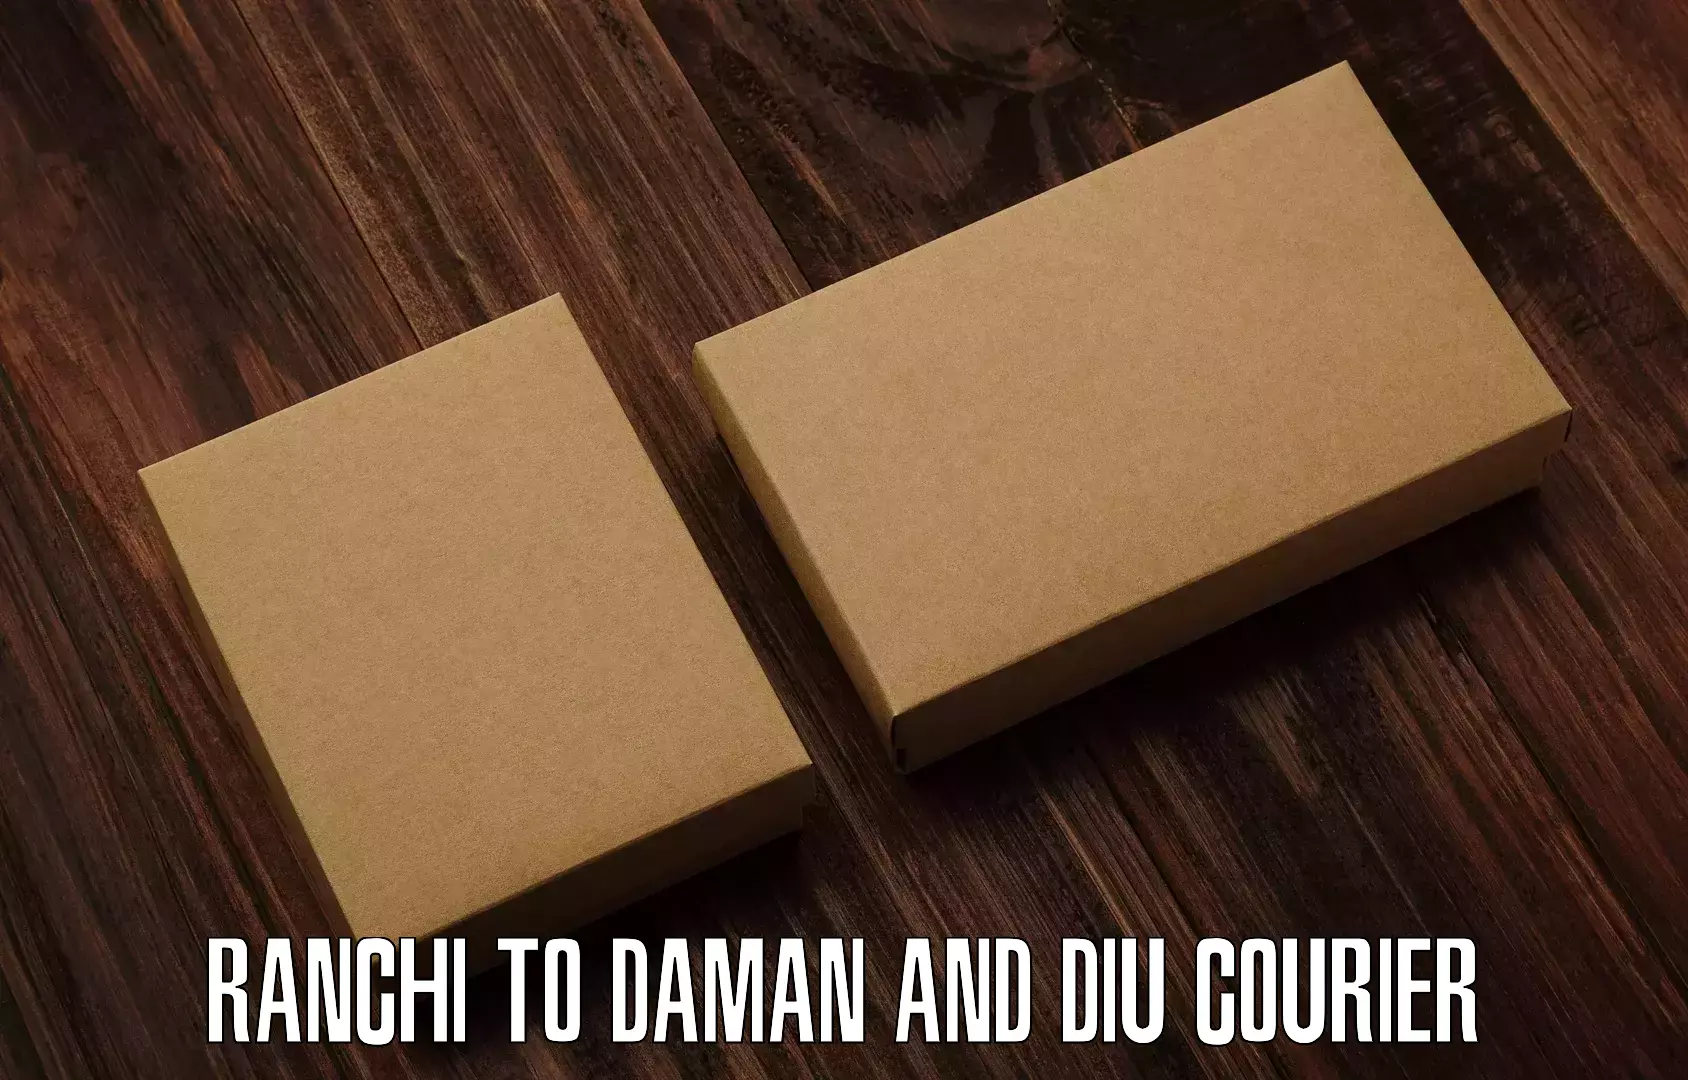 Bulk courier orders Ranchi to Daman and Diu